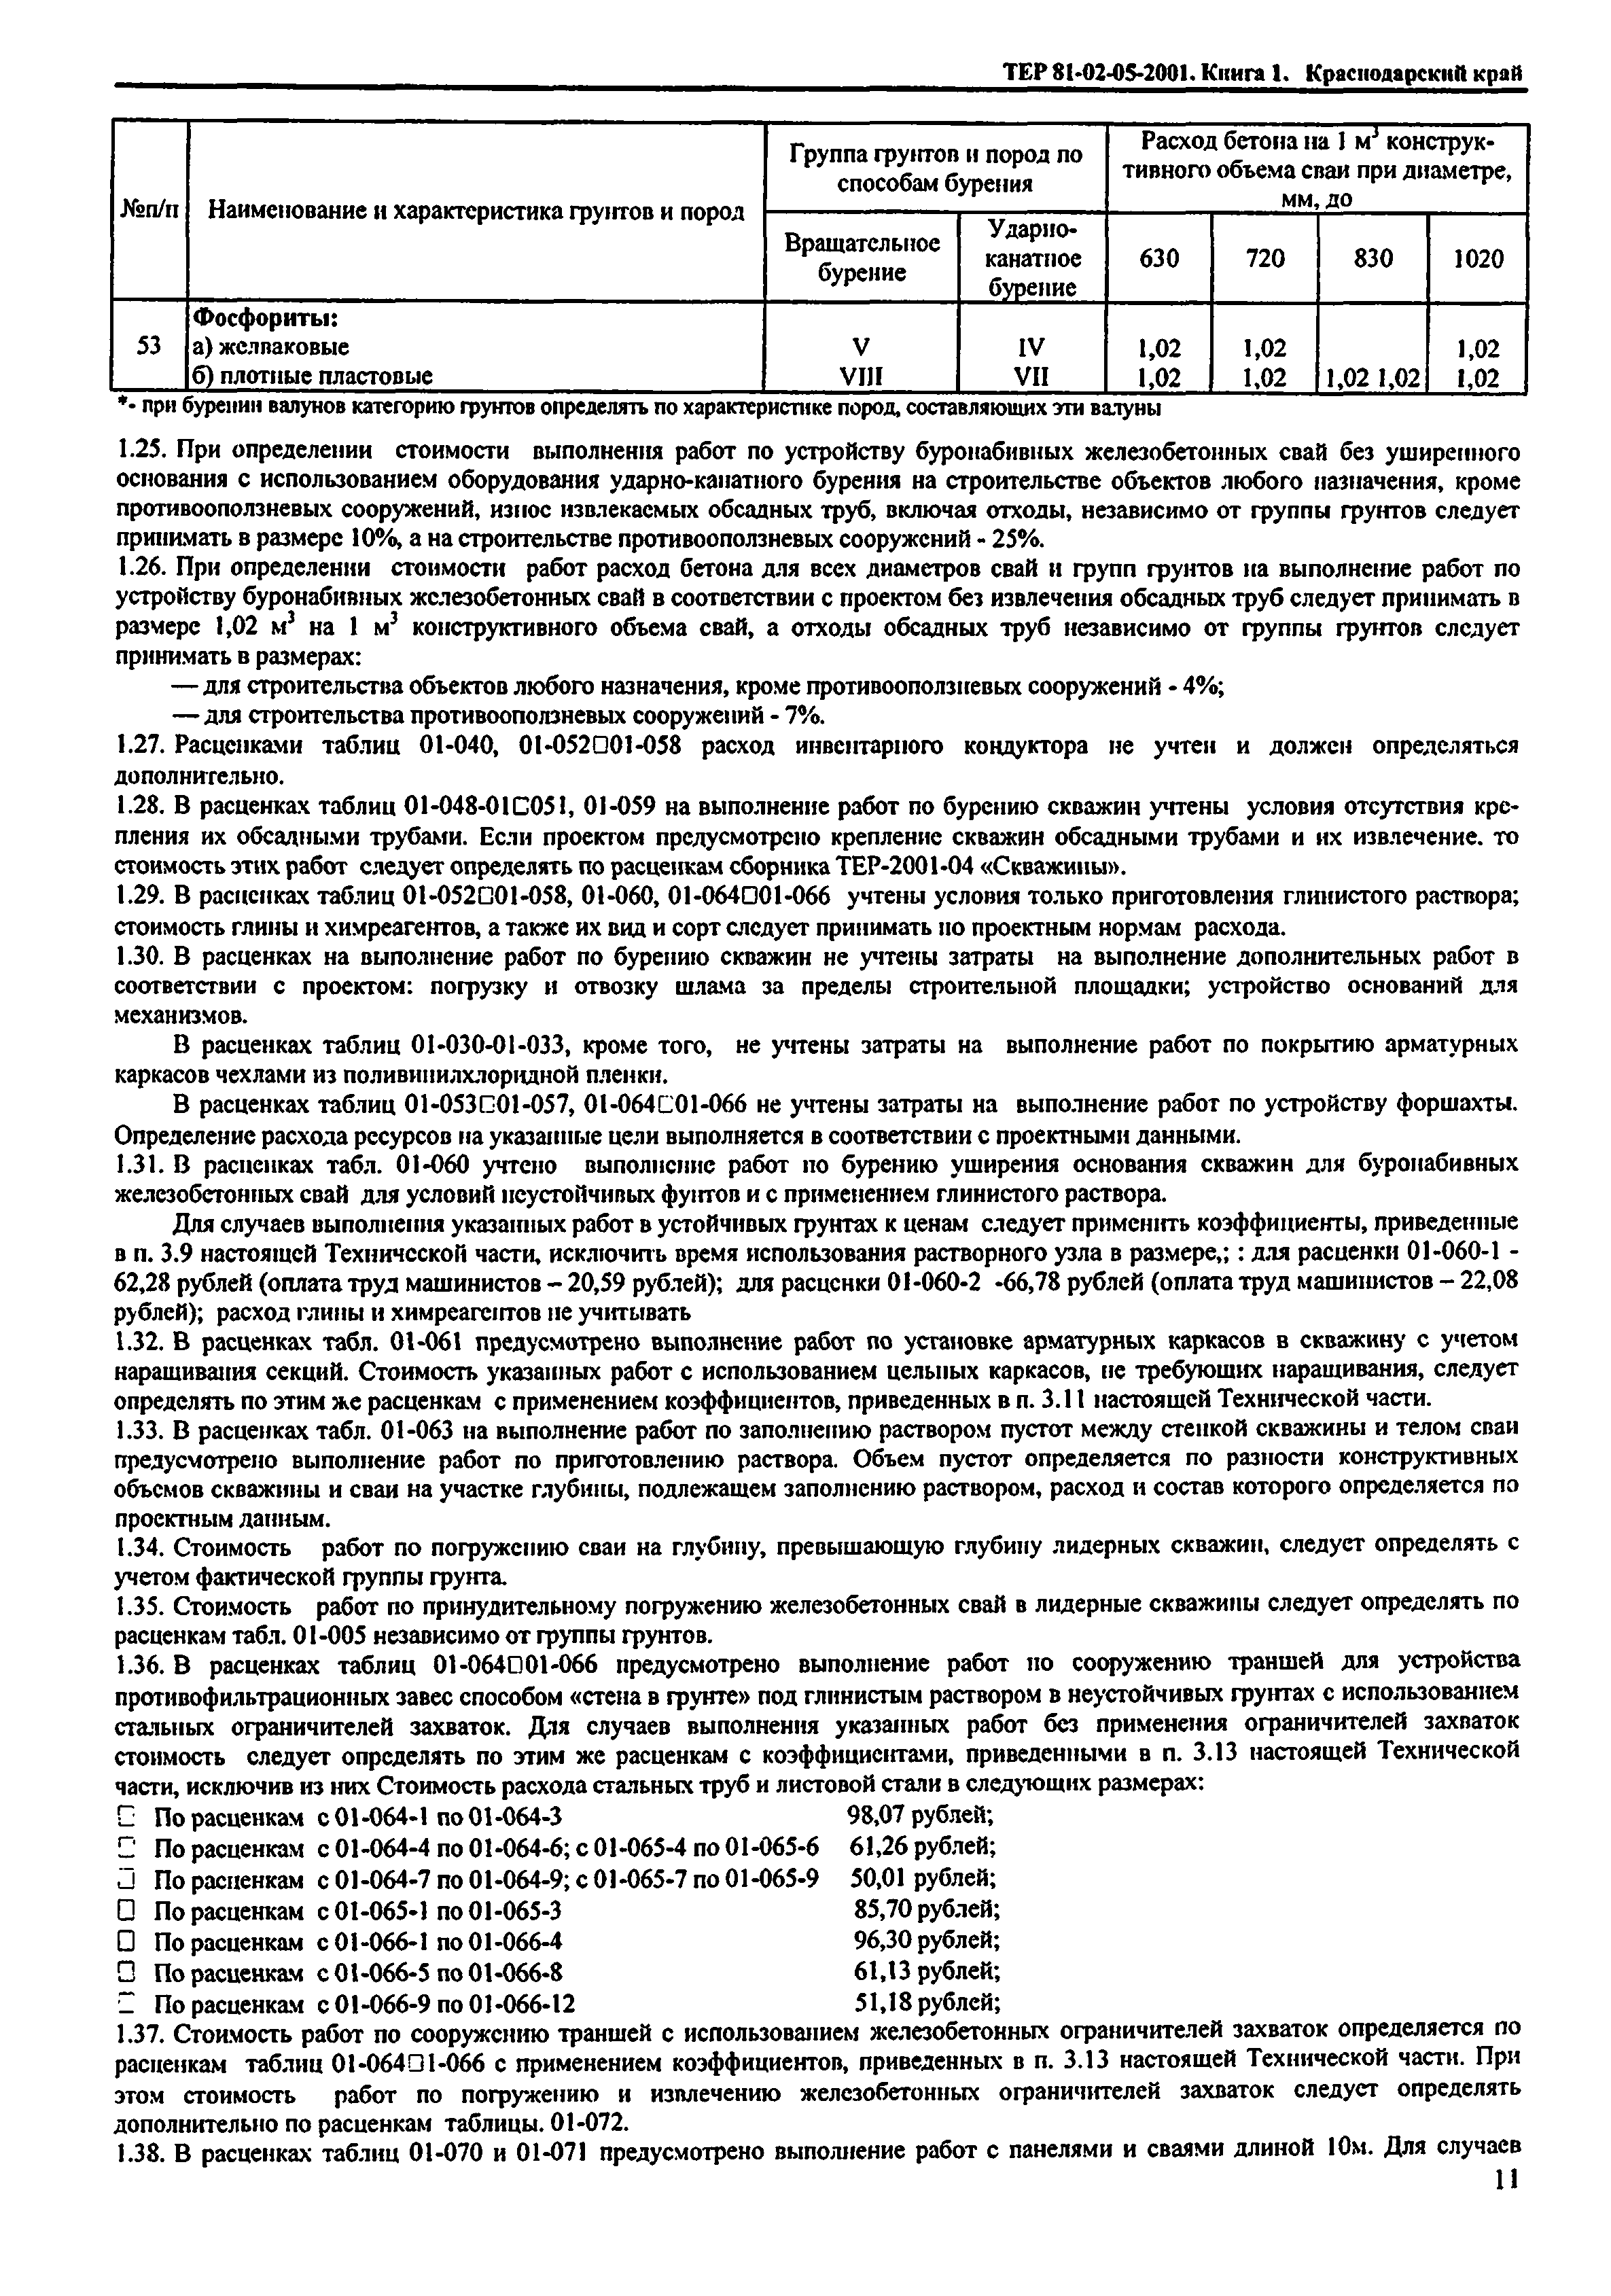 ТЕР Краснодарского края 2001-05